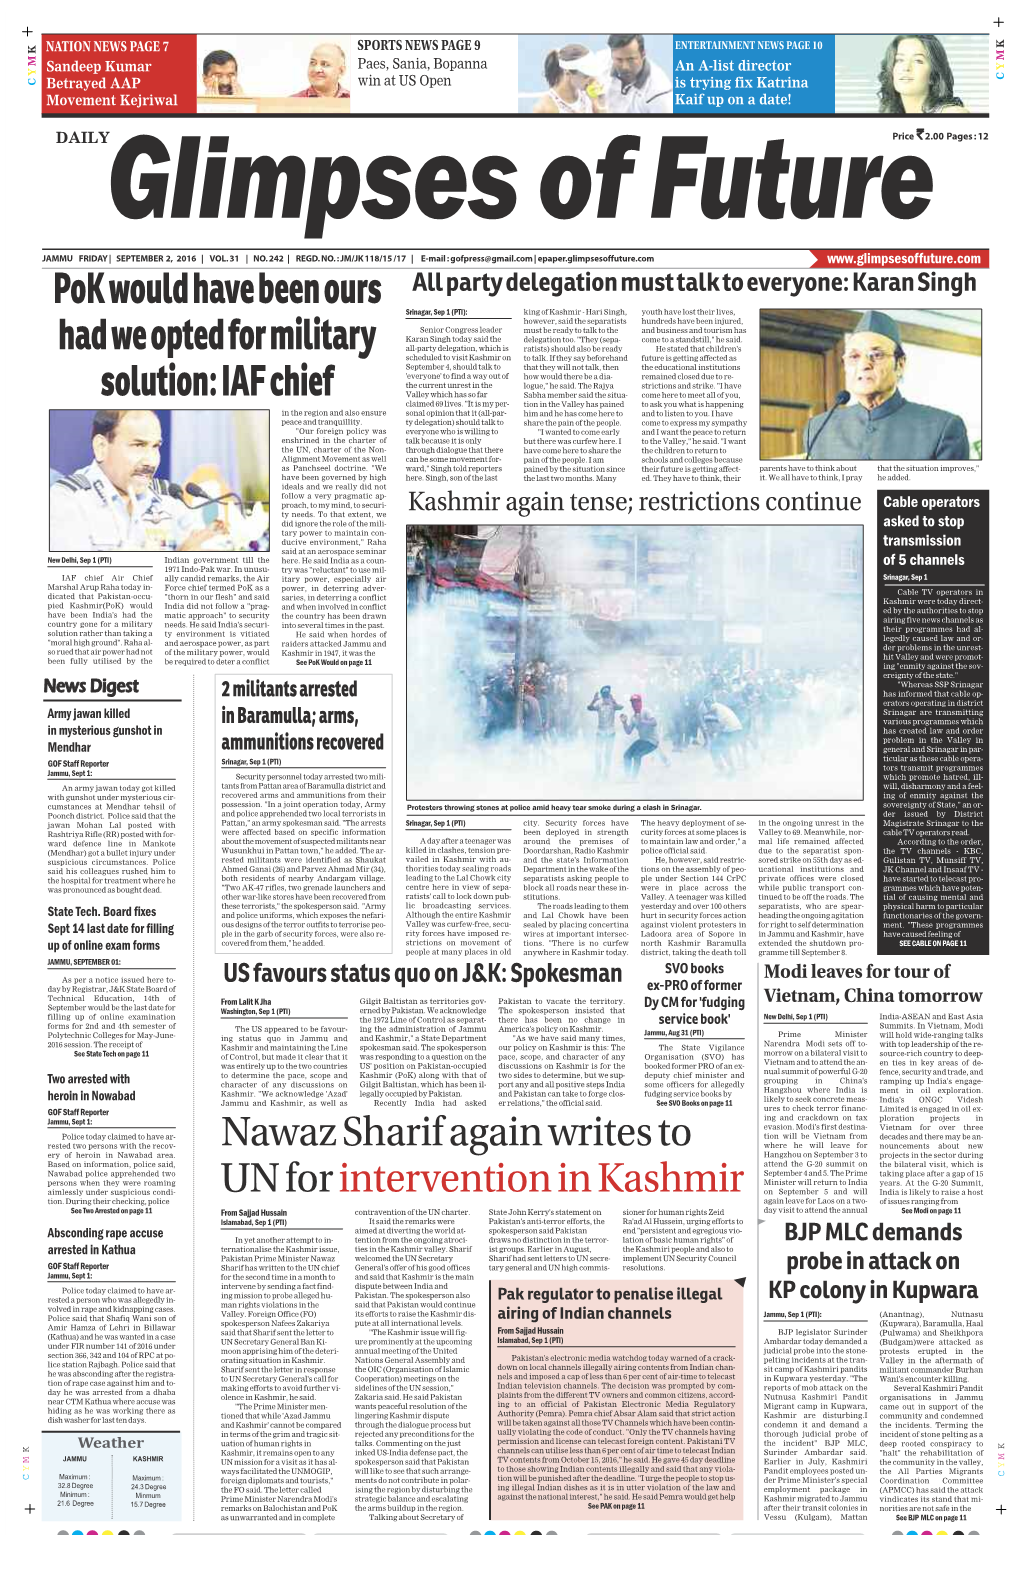 Nawaz Sharif Again Writes to UN for Intervention in Kashmir